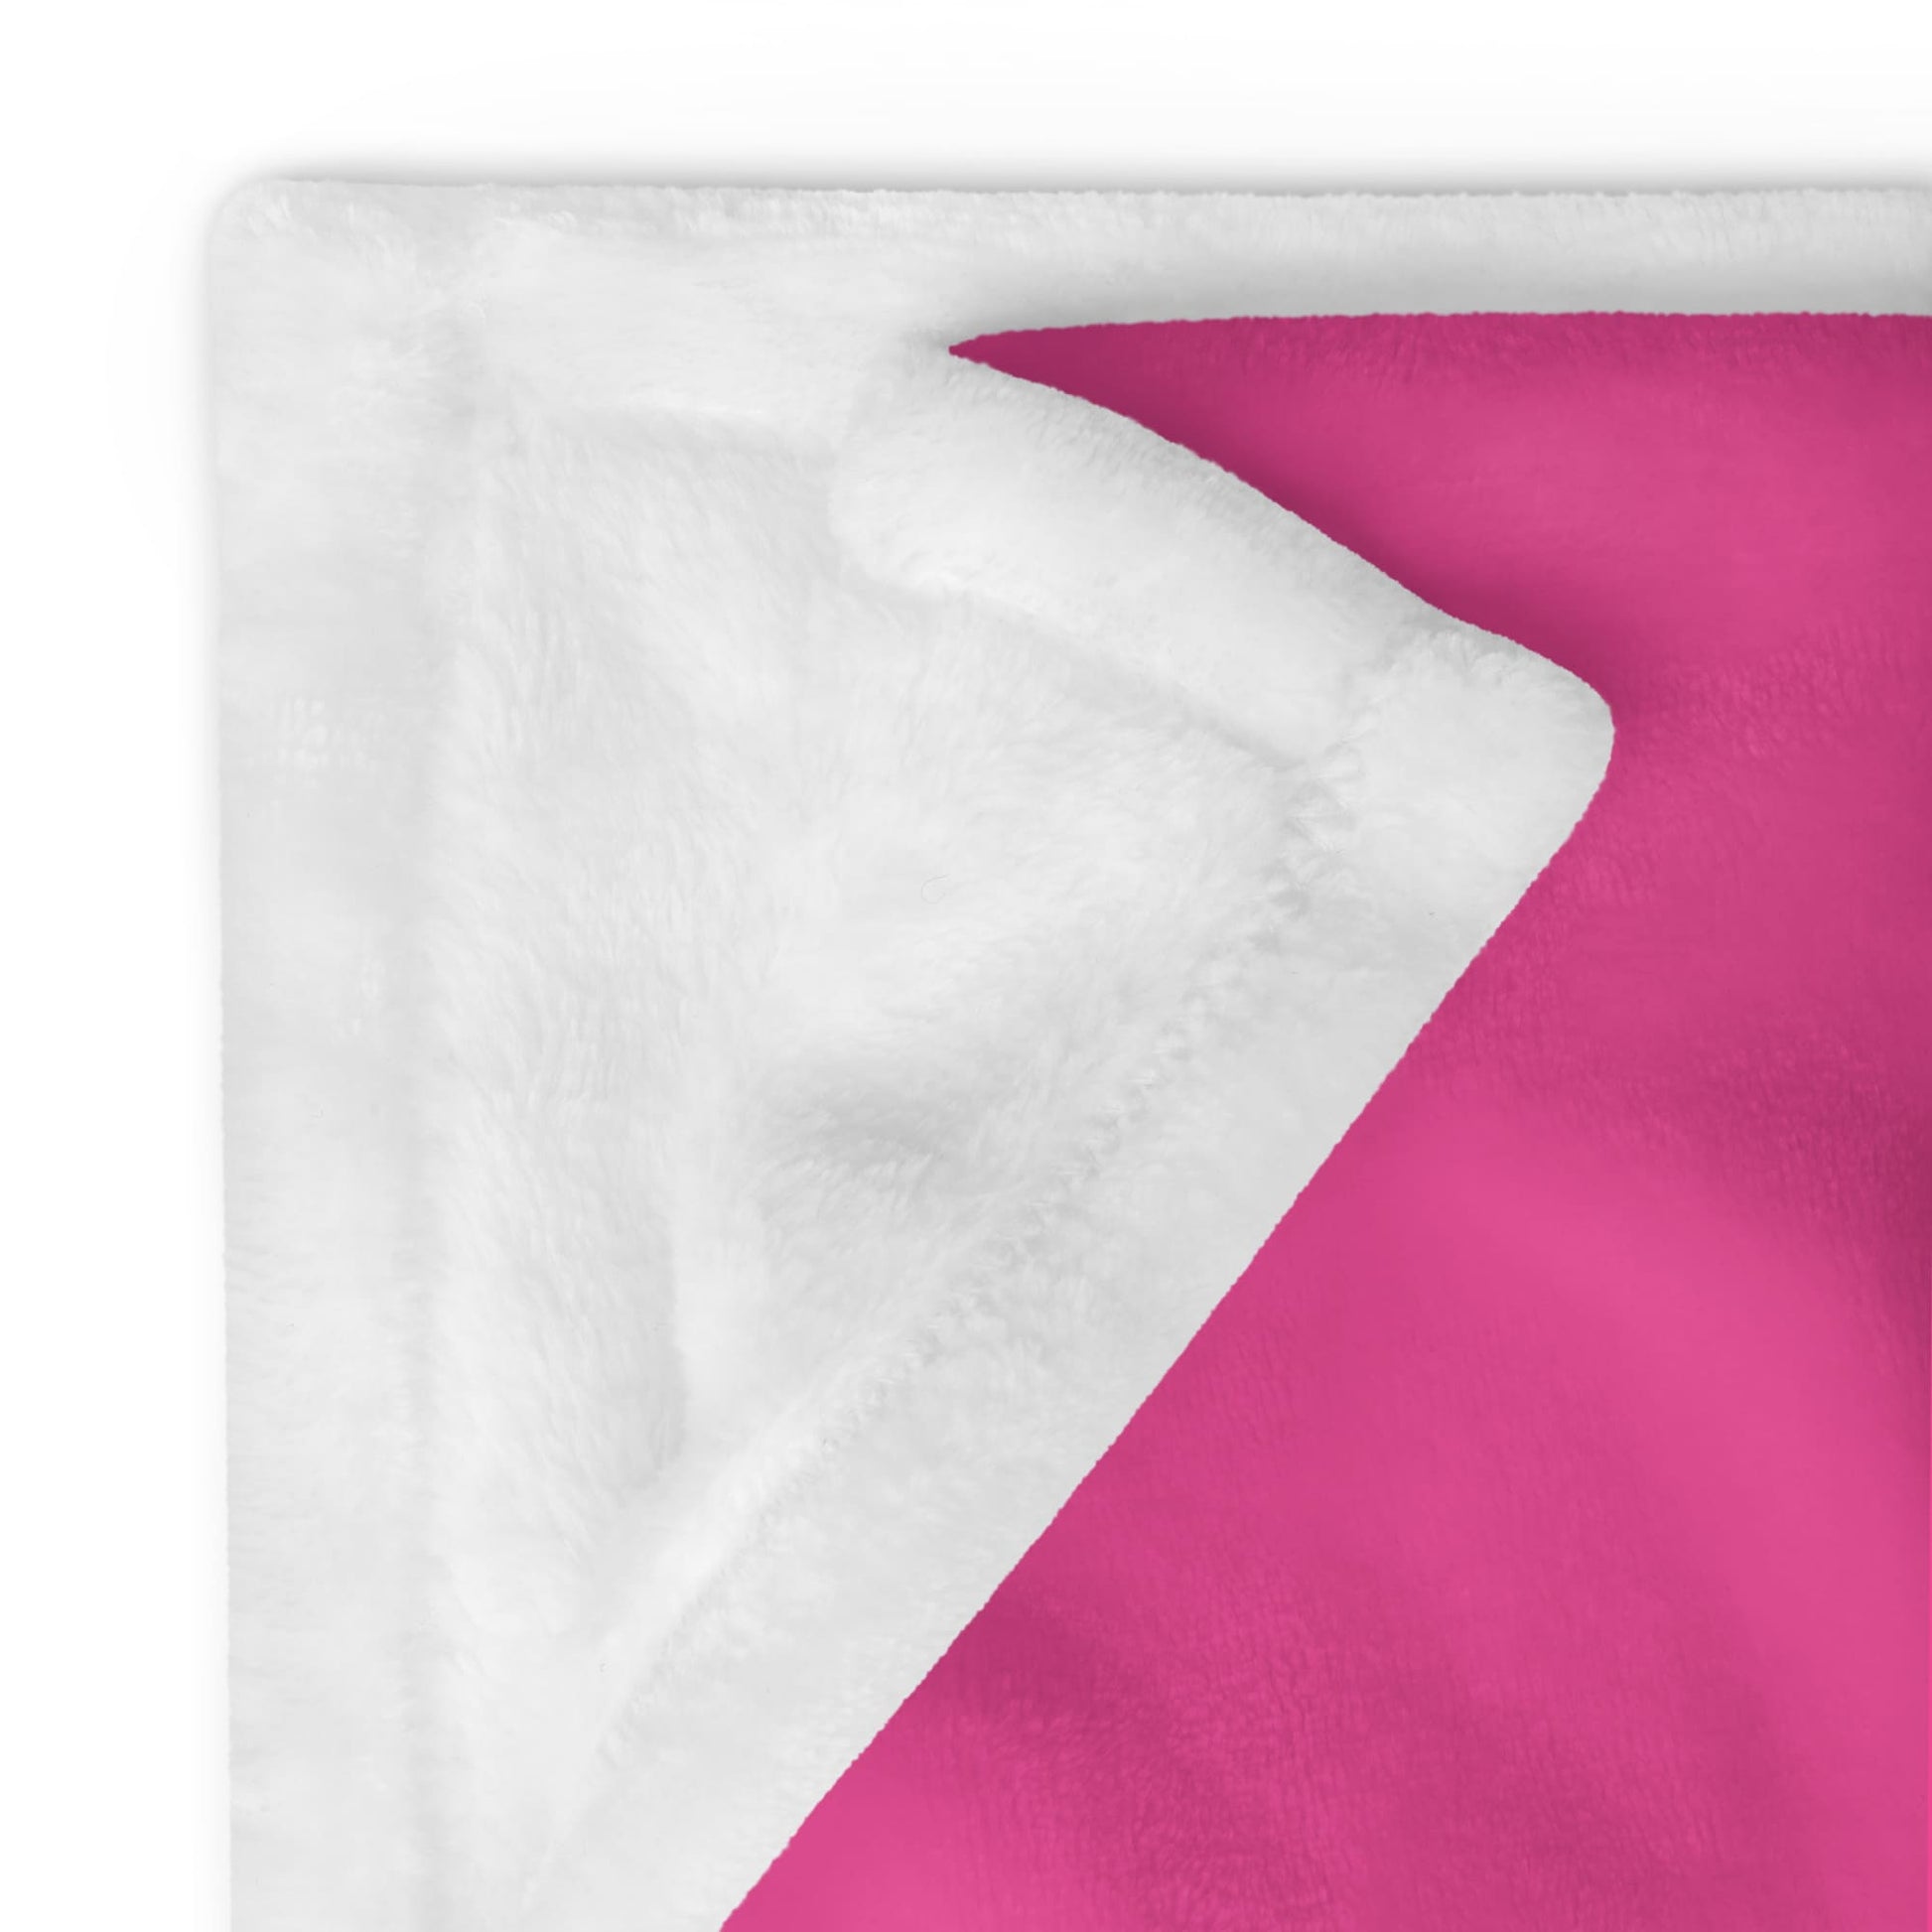 pansexual blanket detail